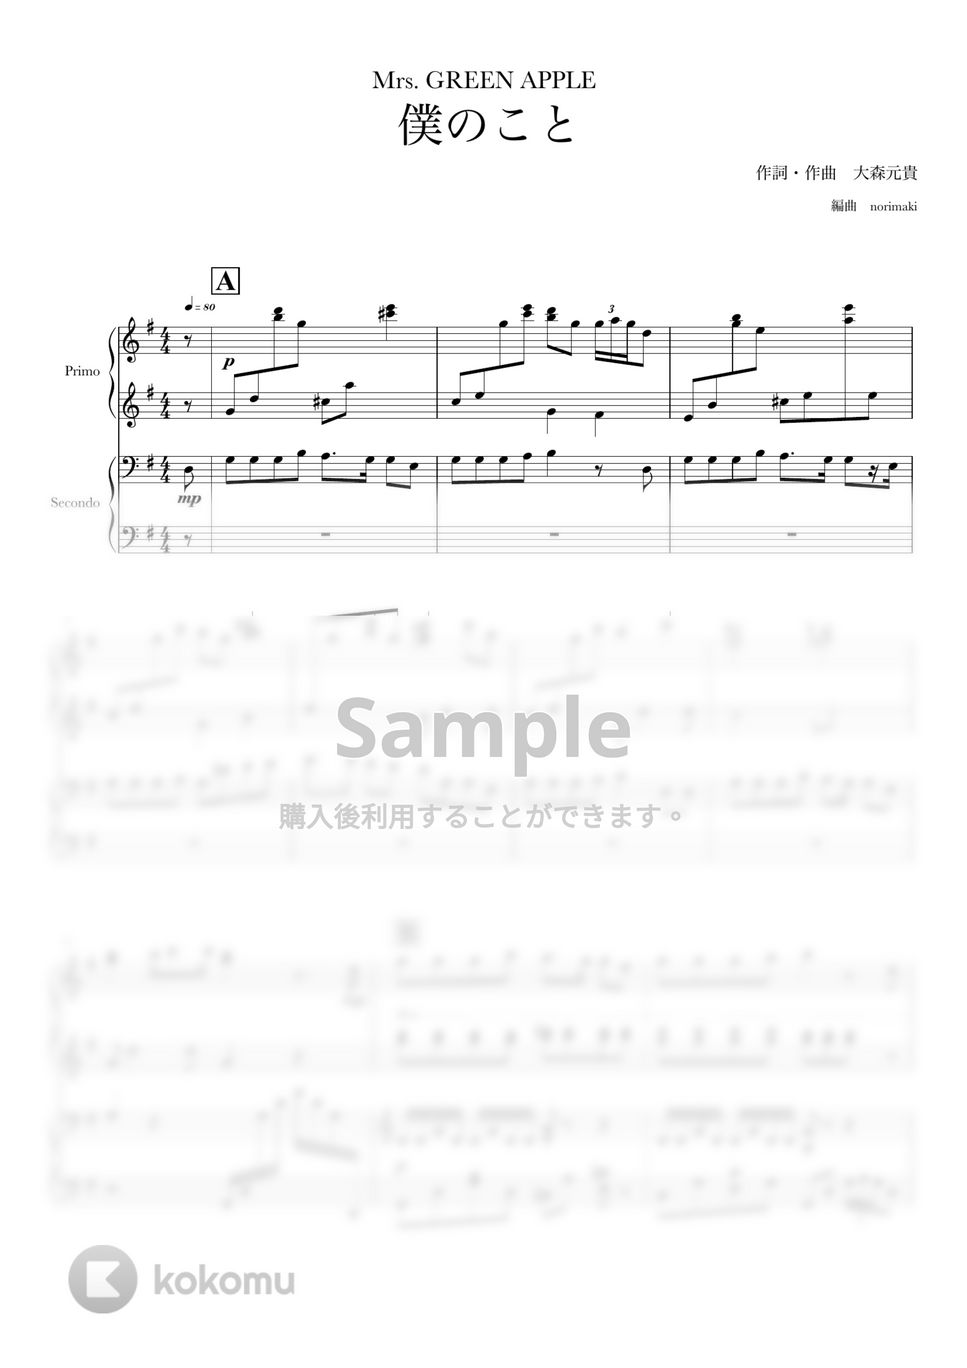 Mrs. GREEN APPLE - 僕のこと (ピアノ連弾) by norimaki